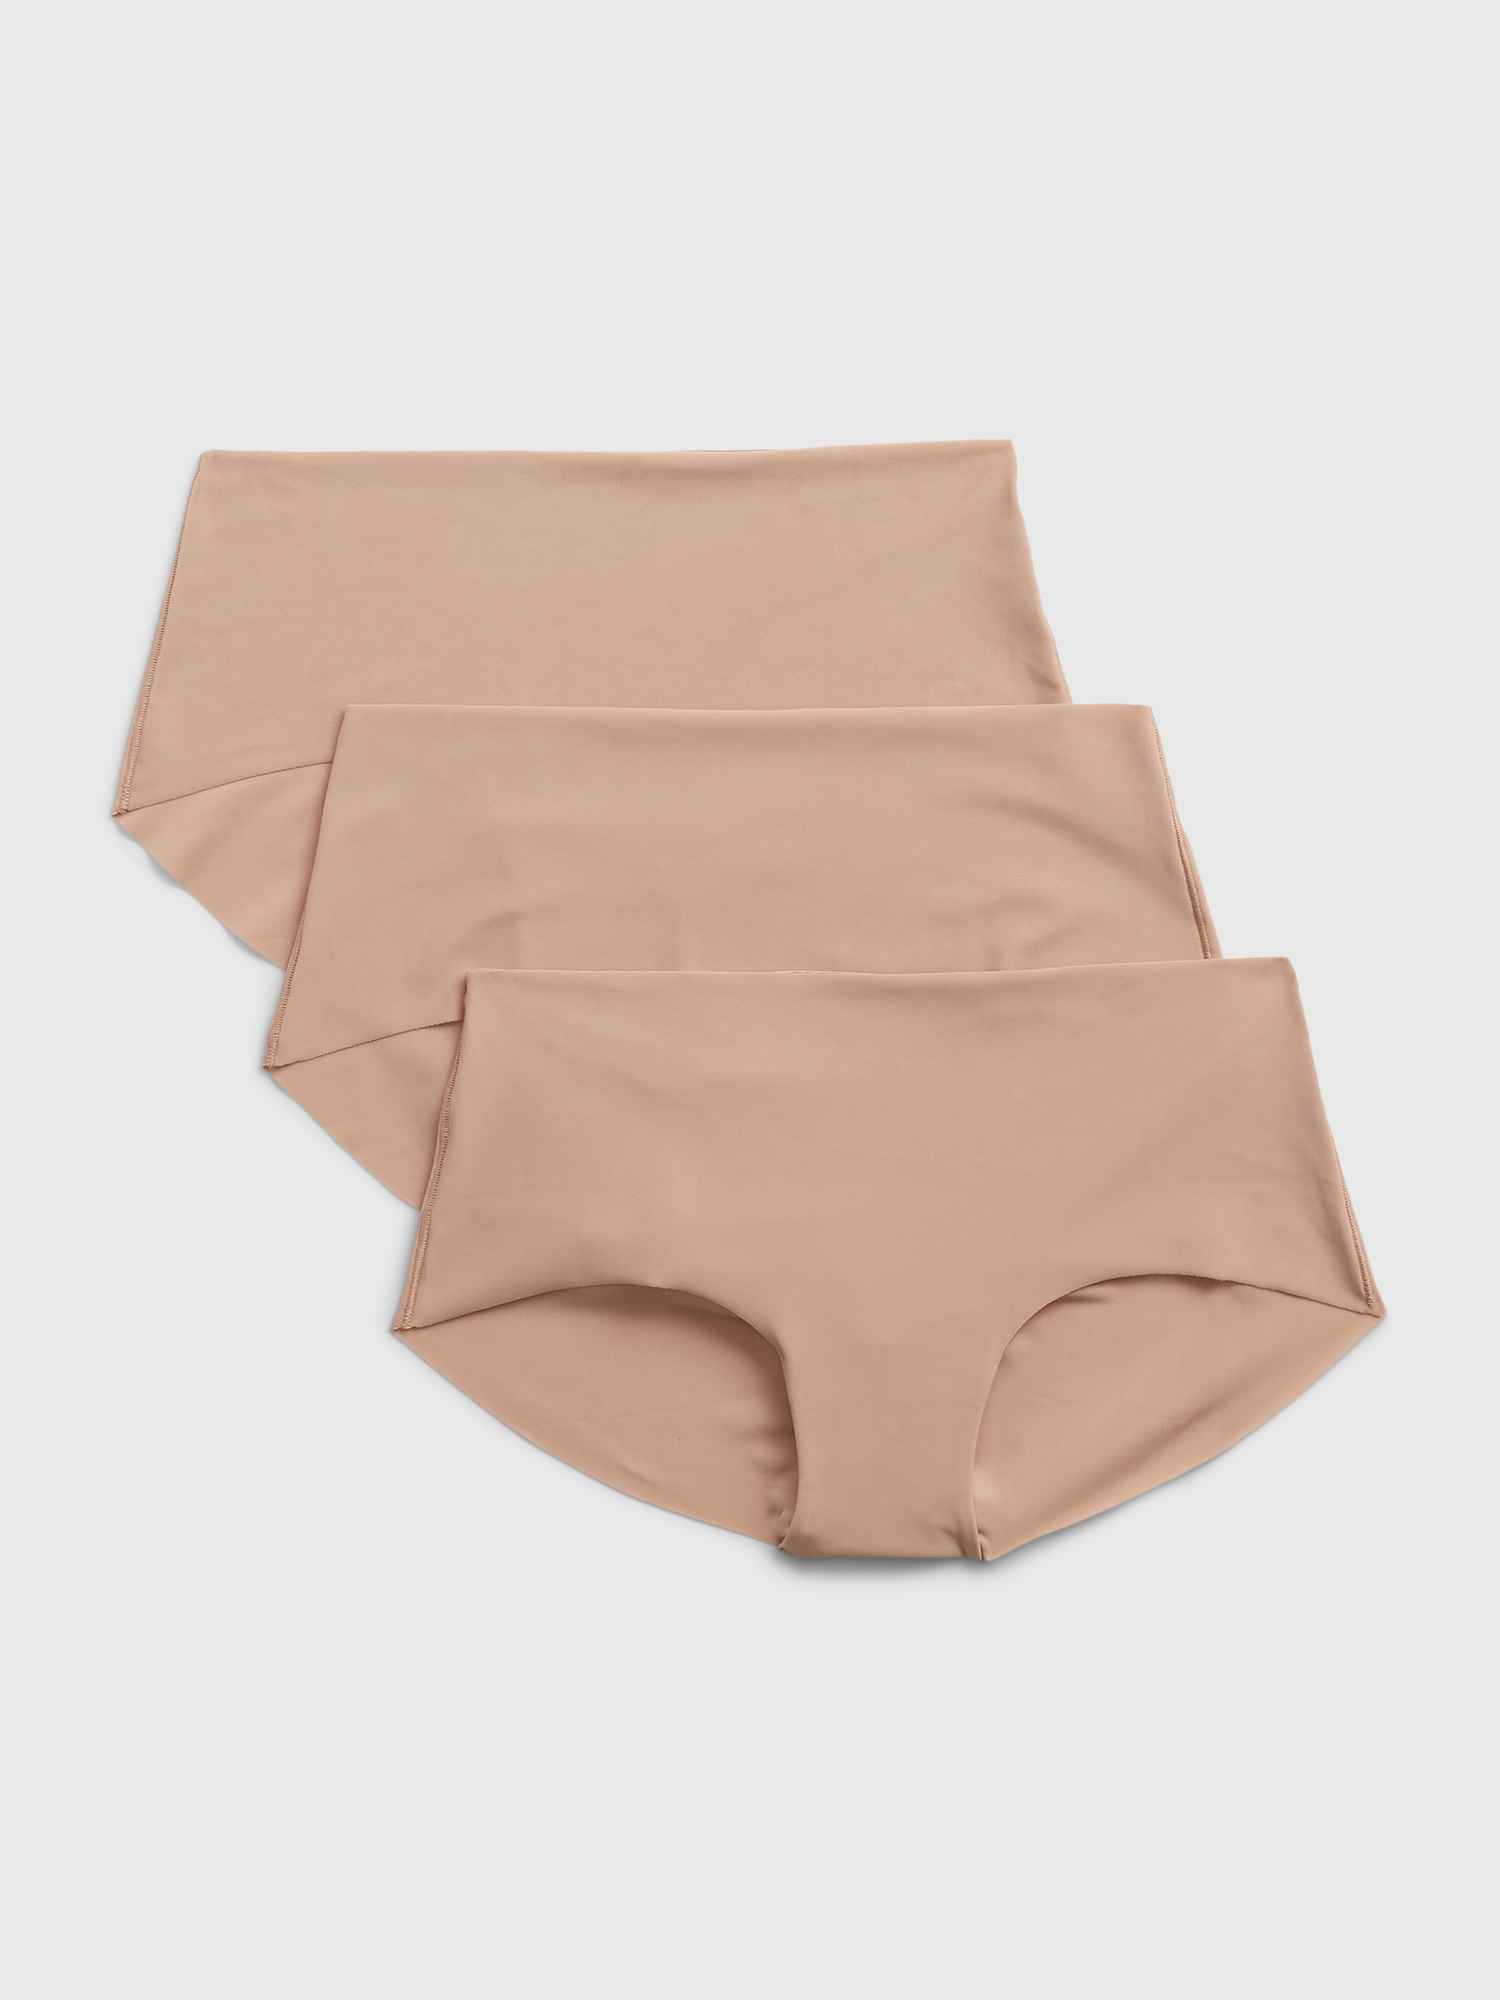 GAP Womens 3-Pack No Show Bikini Underpants Underwear